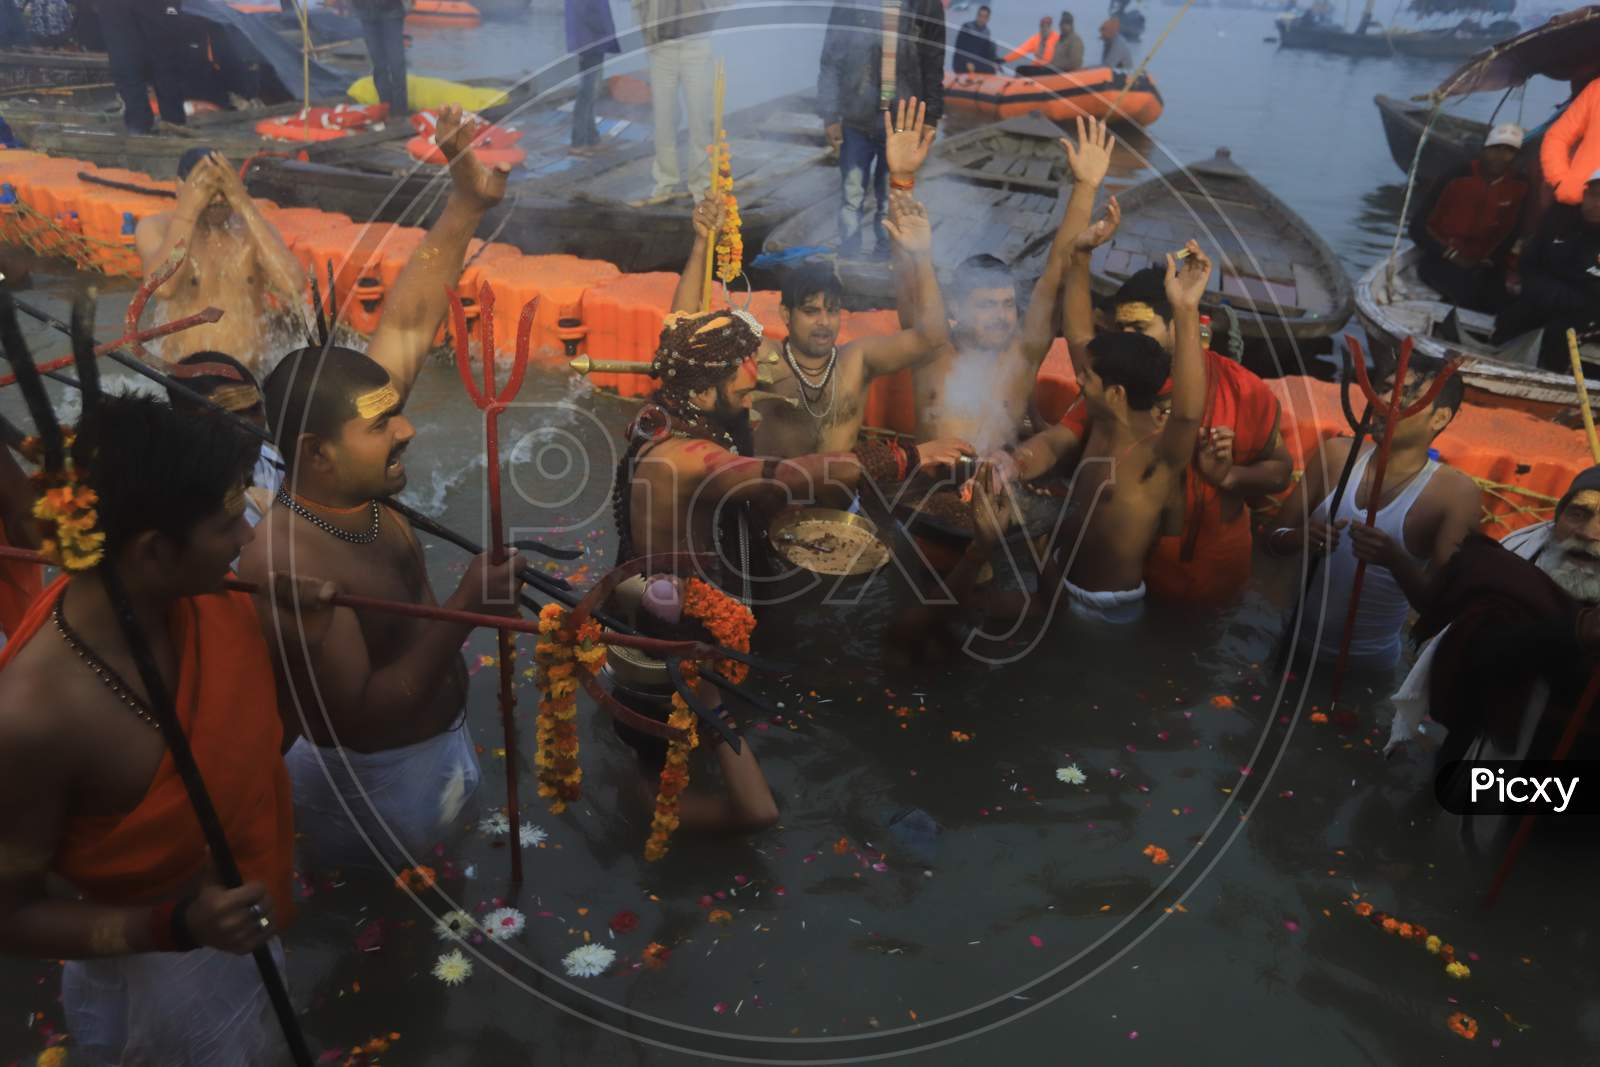 Hindu Baba Or Sadhu Taking Holy Bath  At Triveni Sangam River In Prayagraj  During Magh Mela 2020